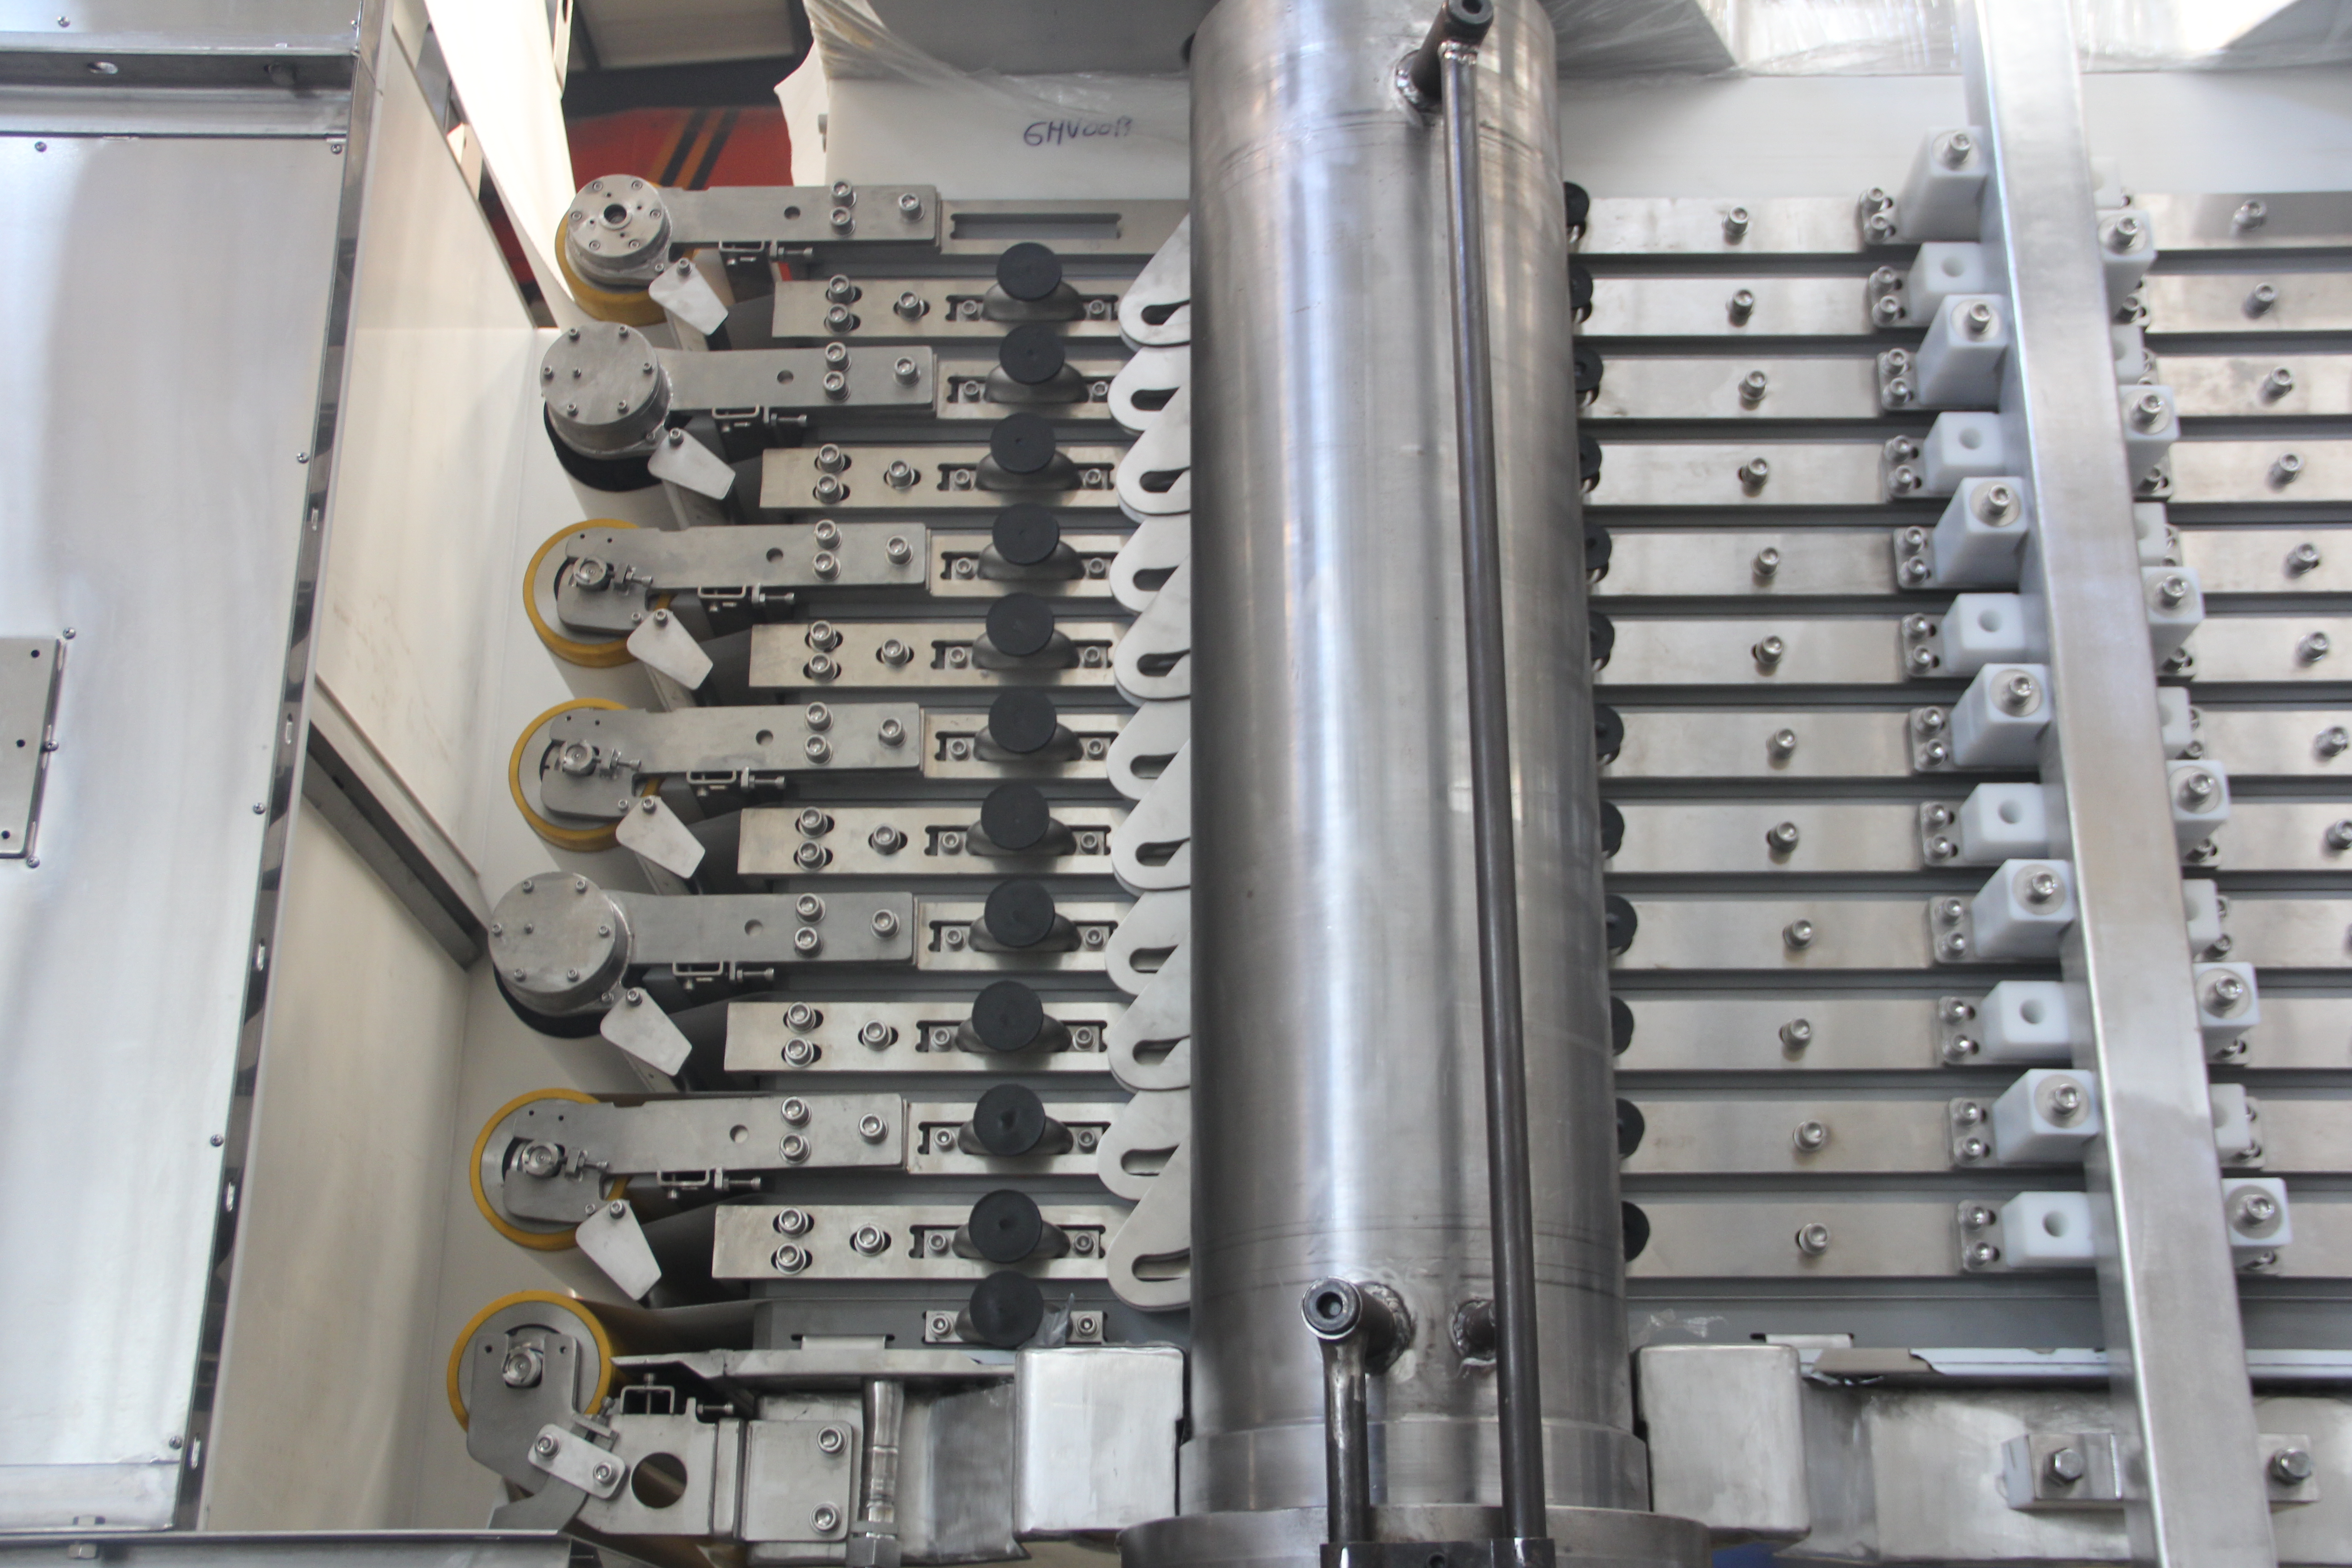 Industrial HVPF Vertical Automatic Filter Press